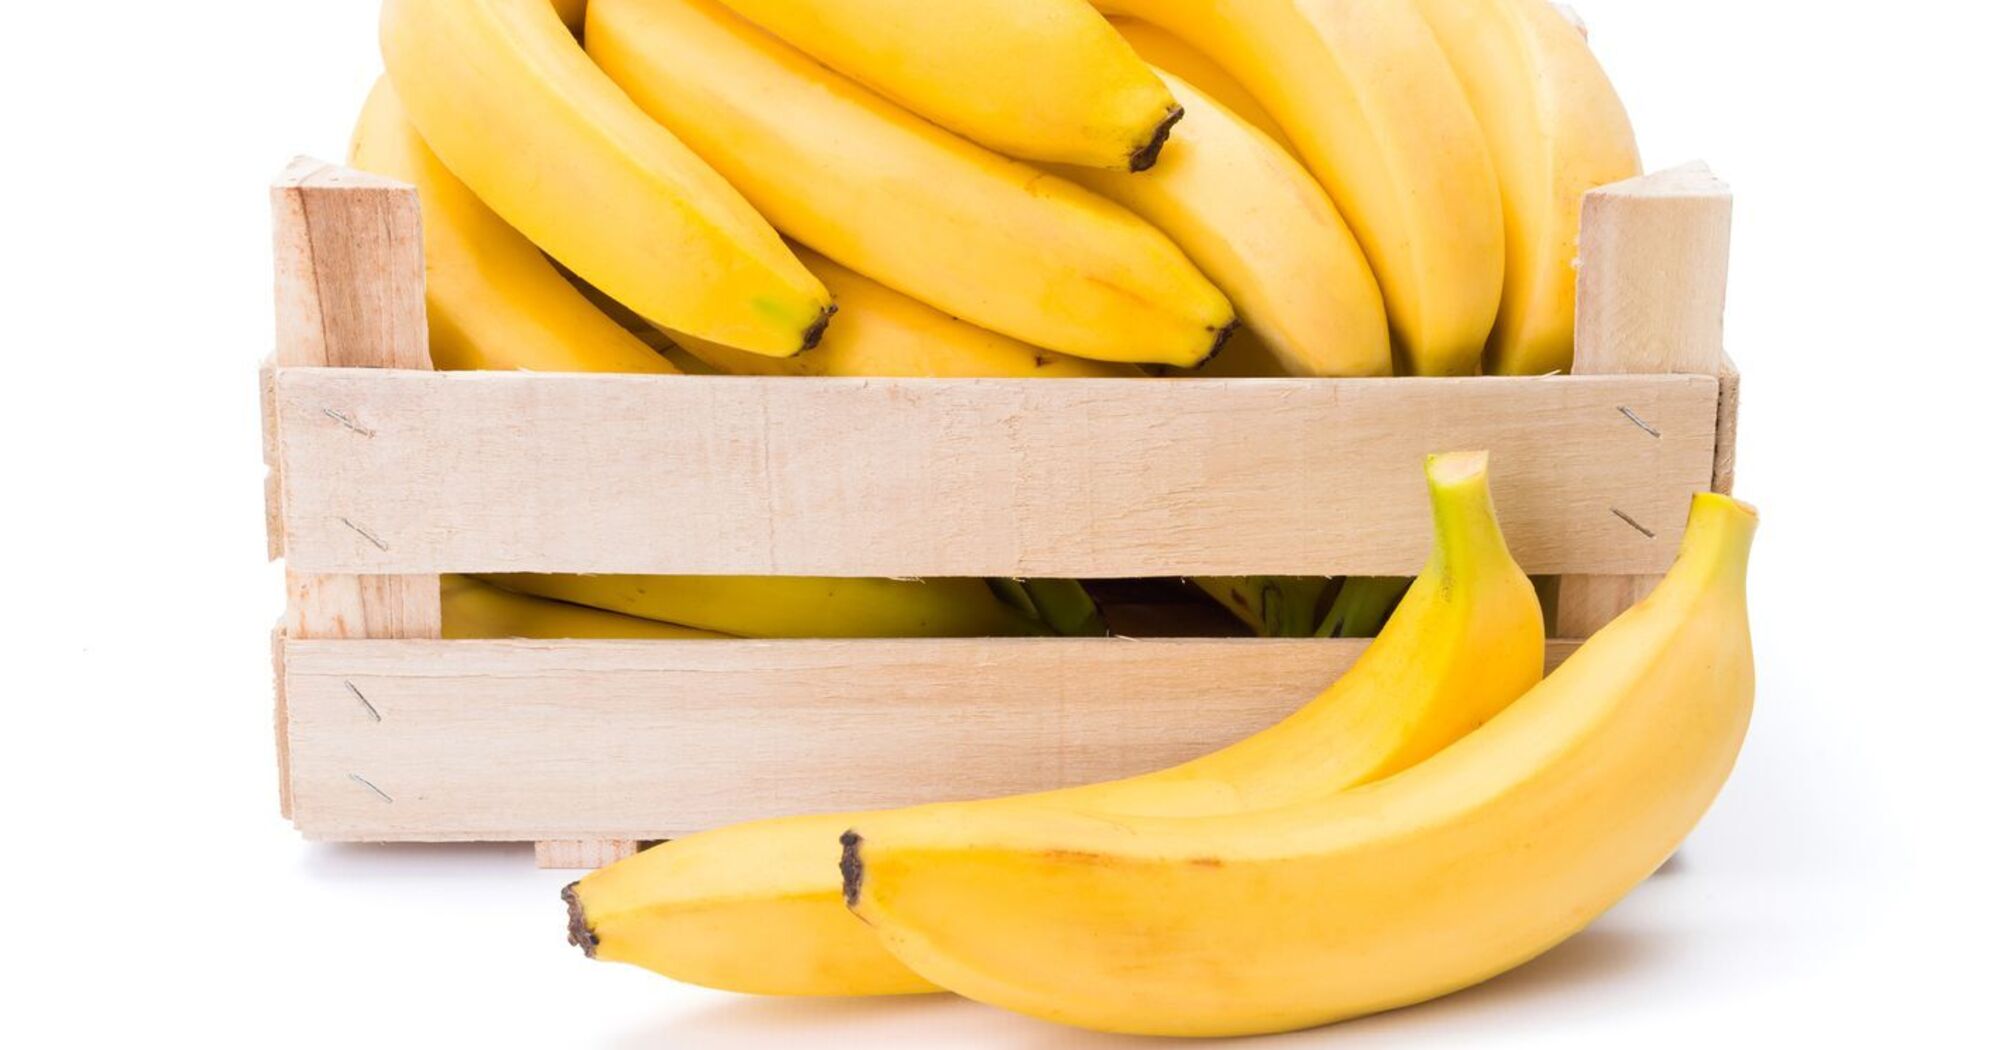 Methods to prolong the freshness of bananas